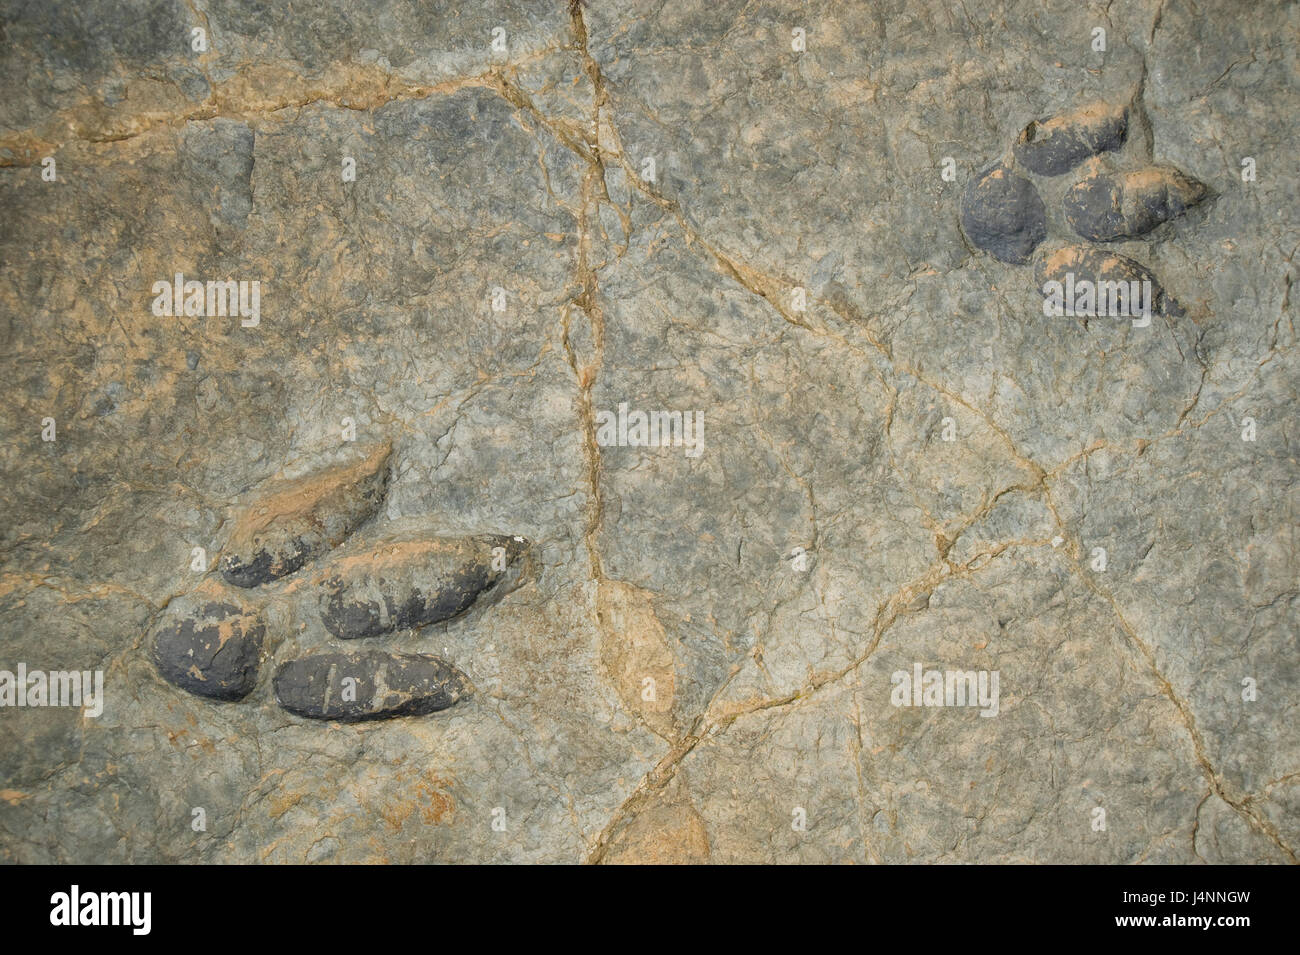 Footprints of theropod in Peñaportillo site near Munilla village, La Rioja, Spain. Stock Photo